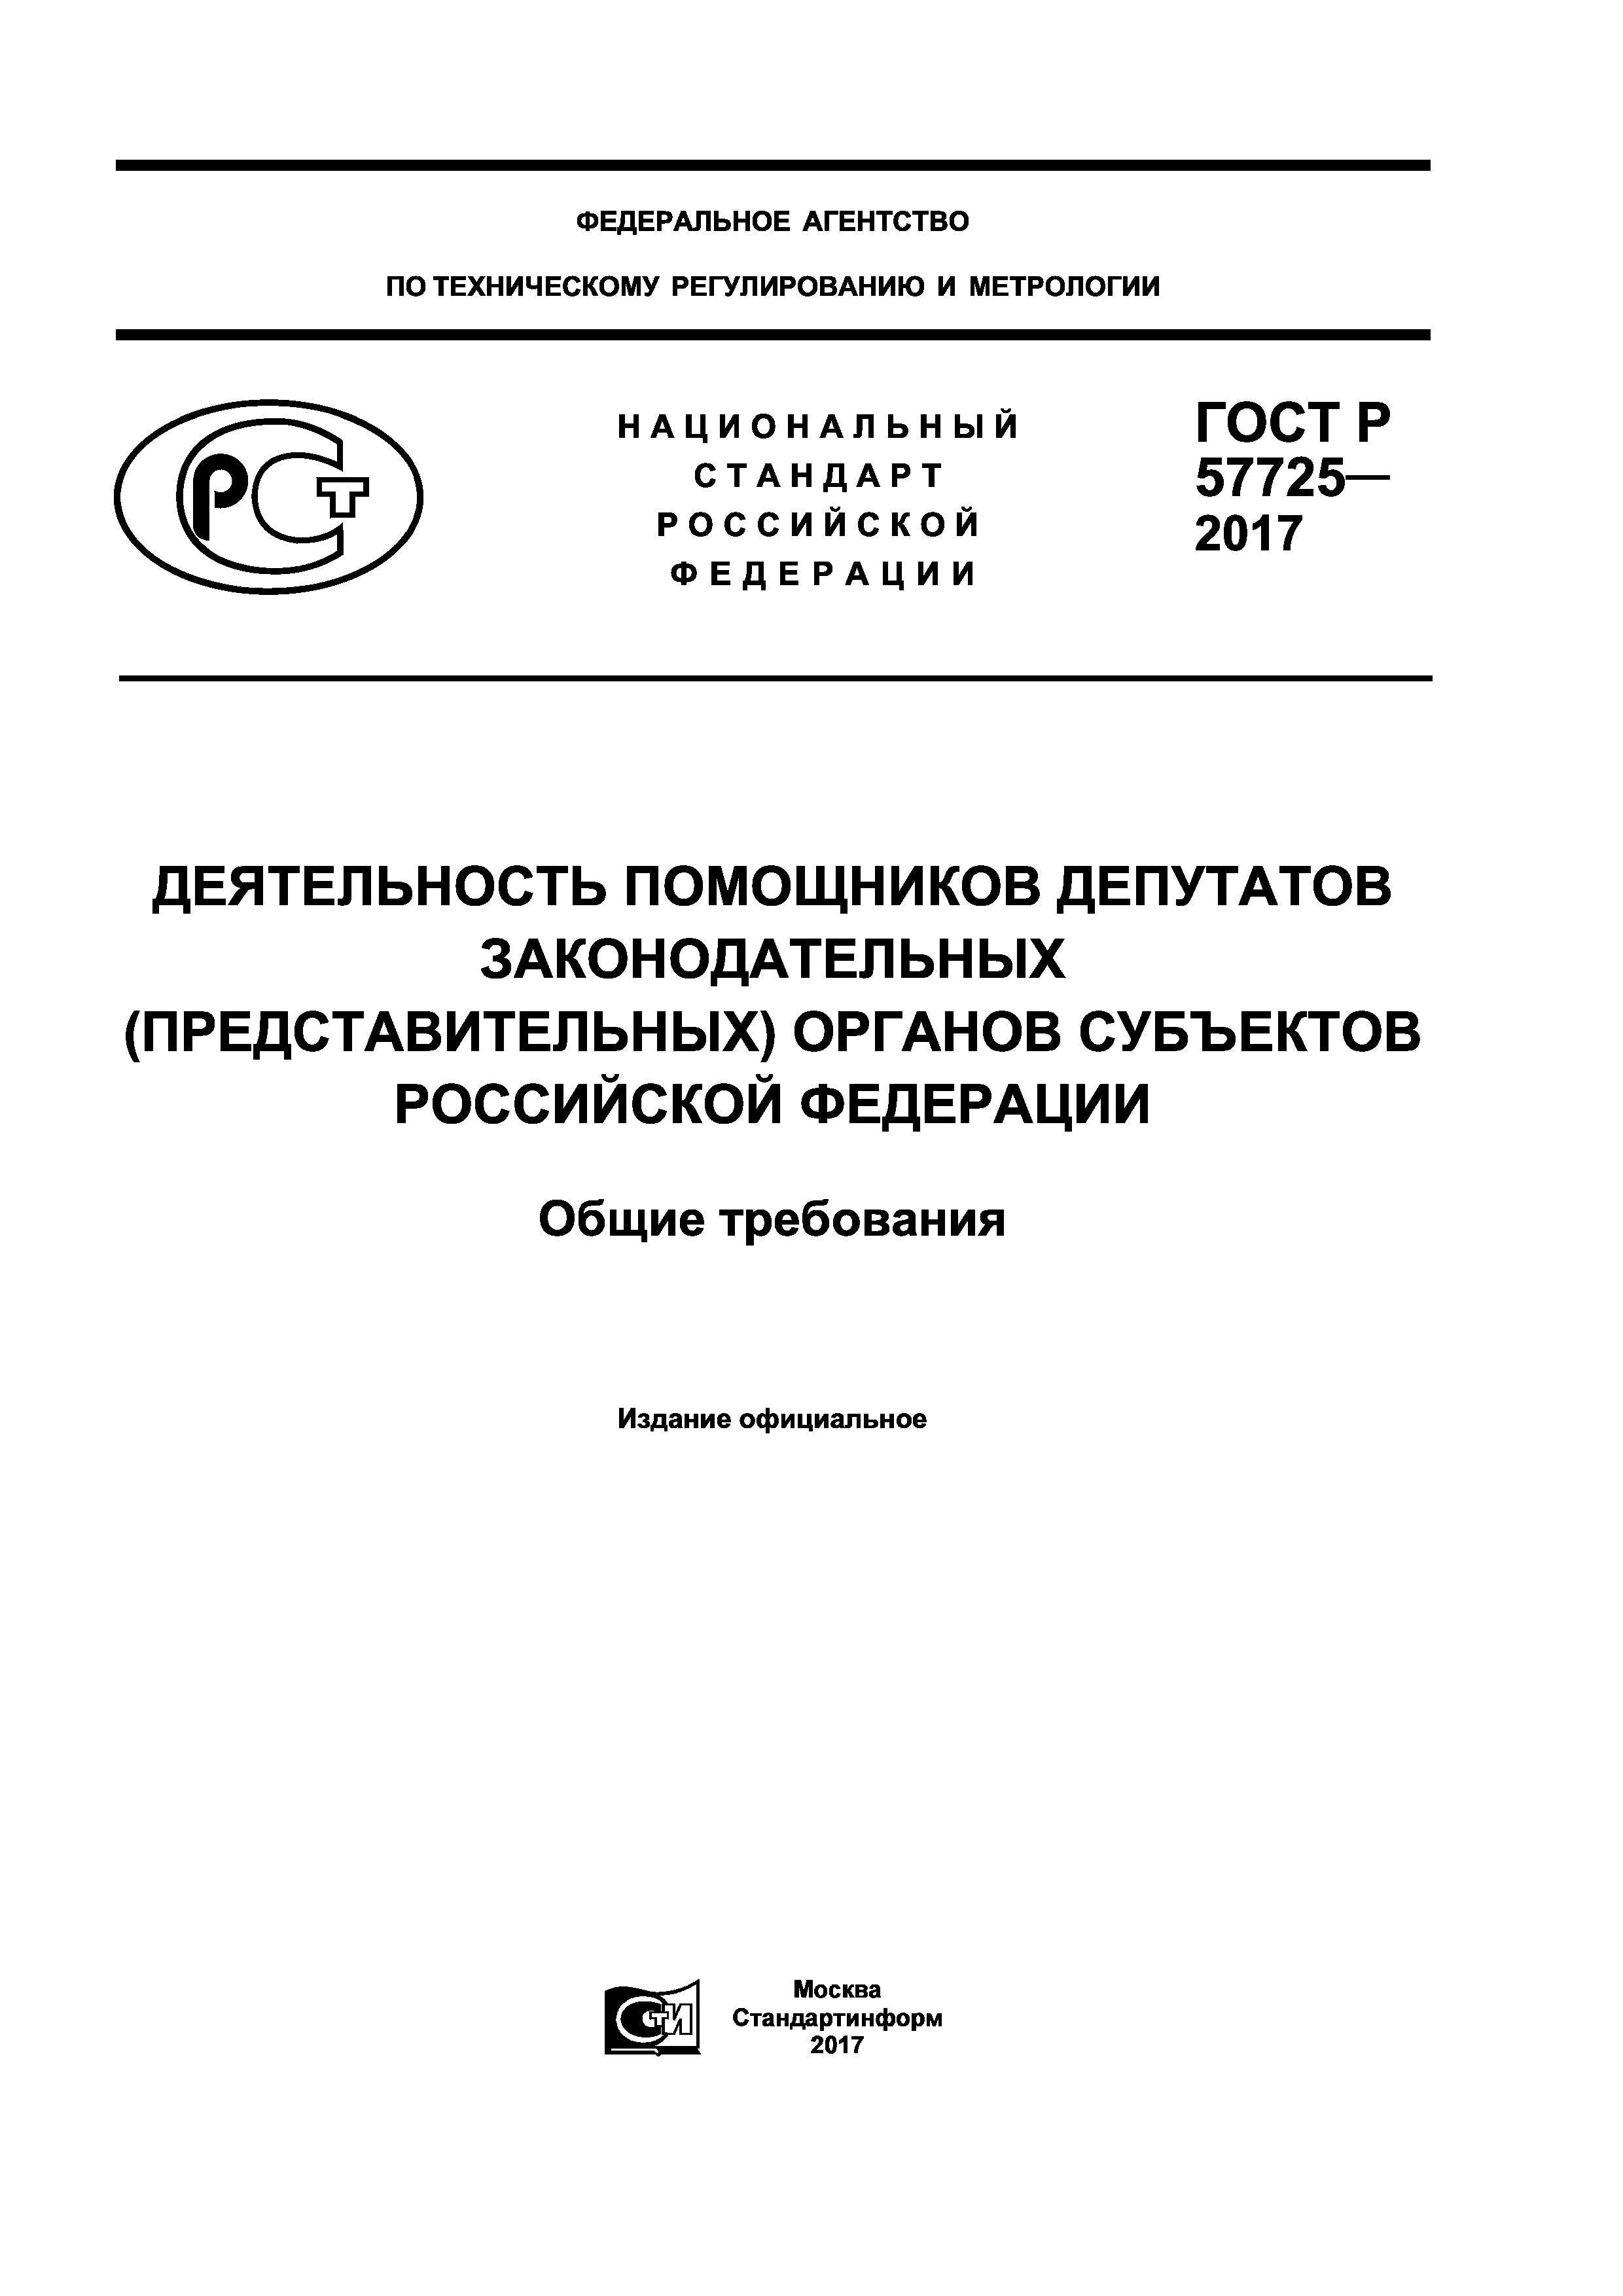 ГОСТ Р 57725-2017